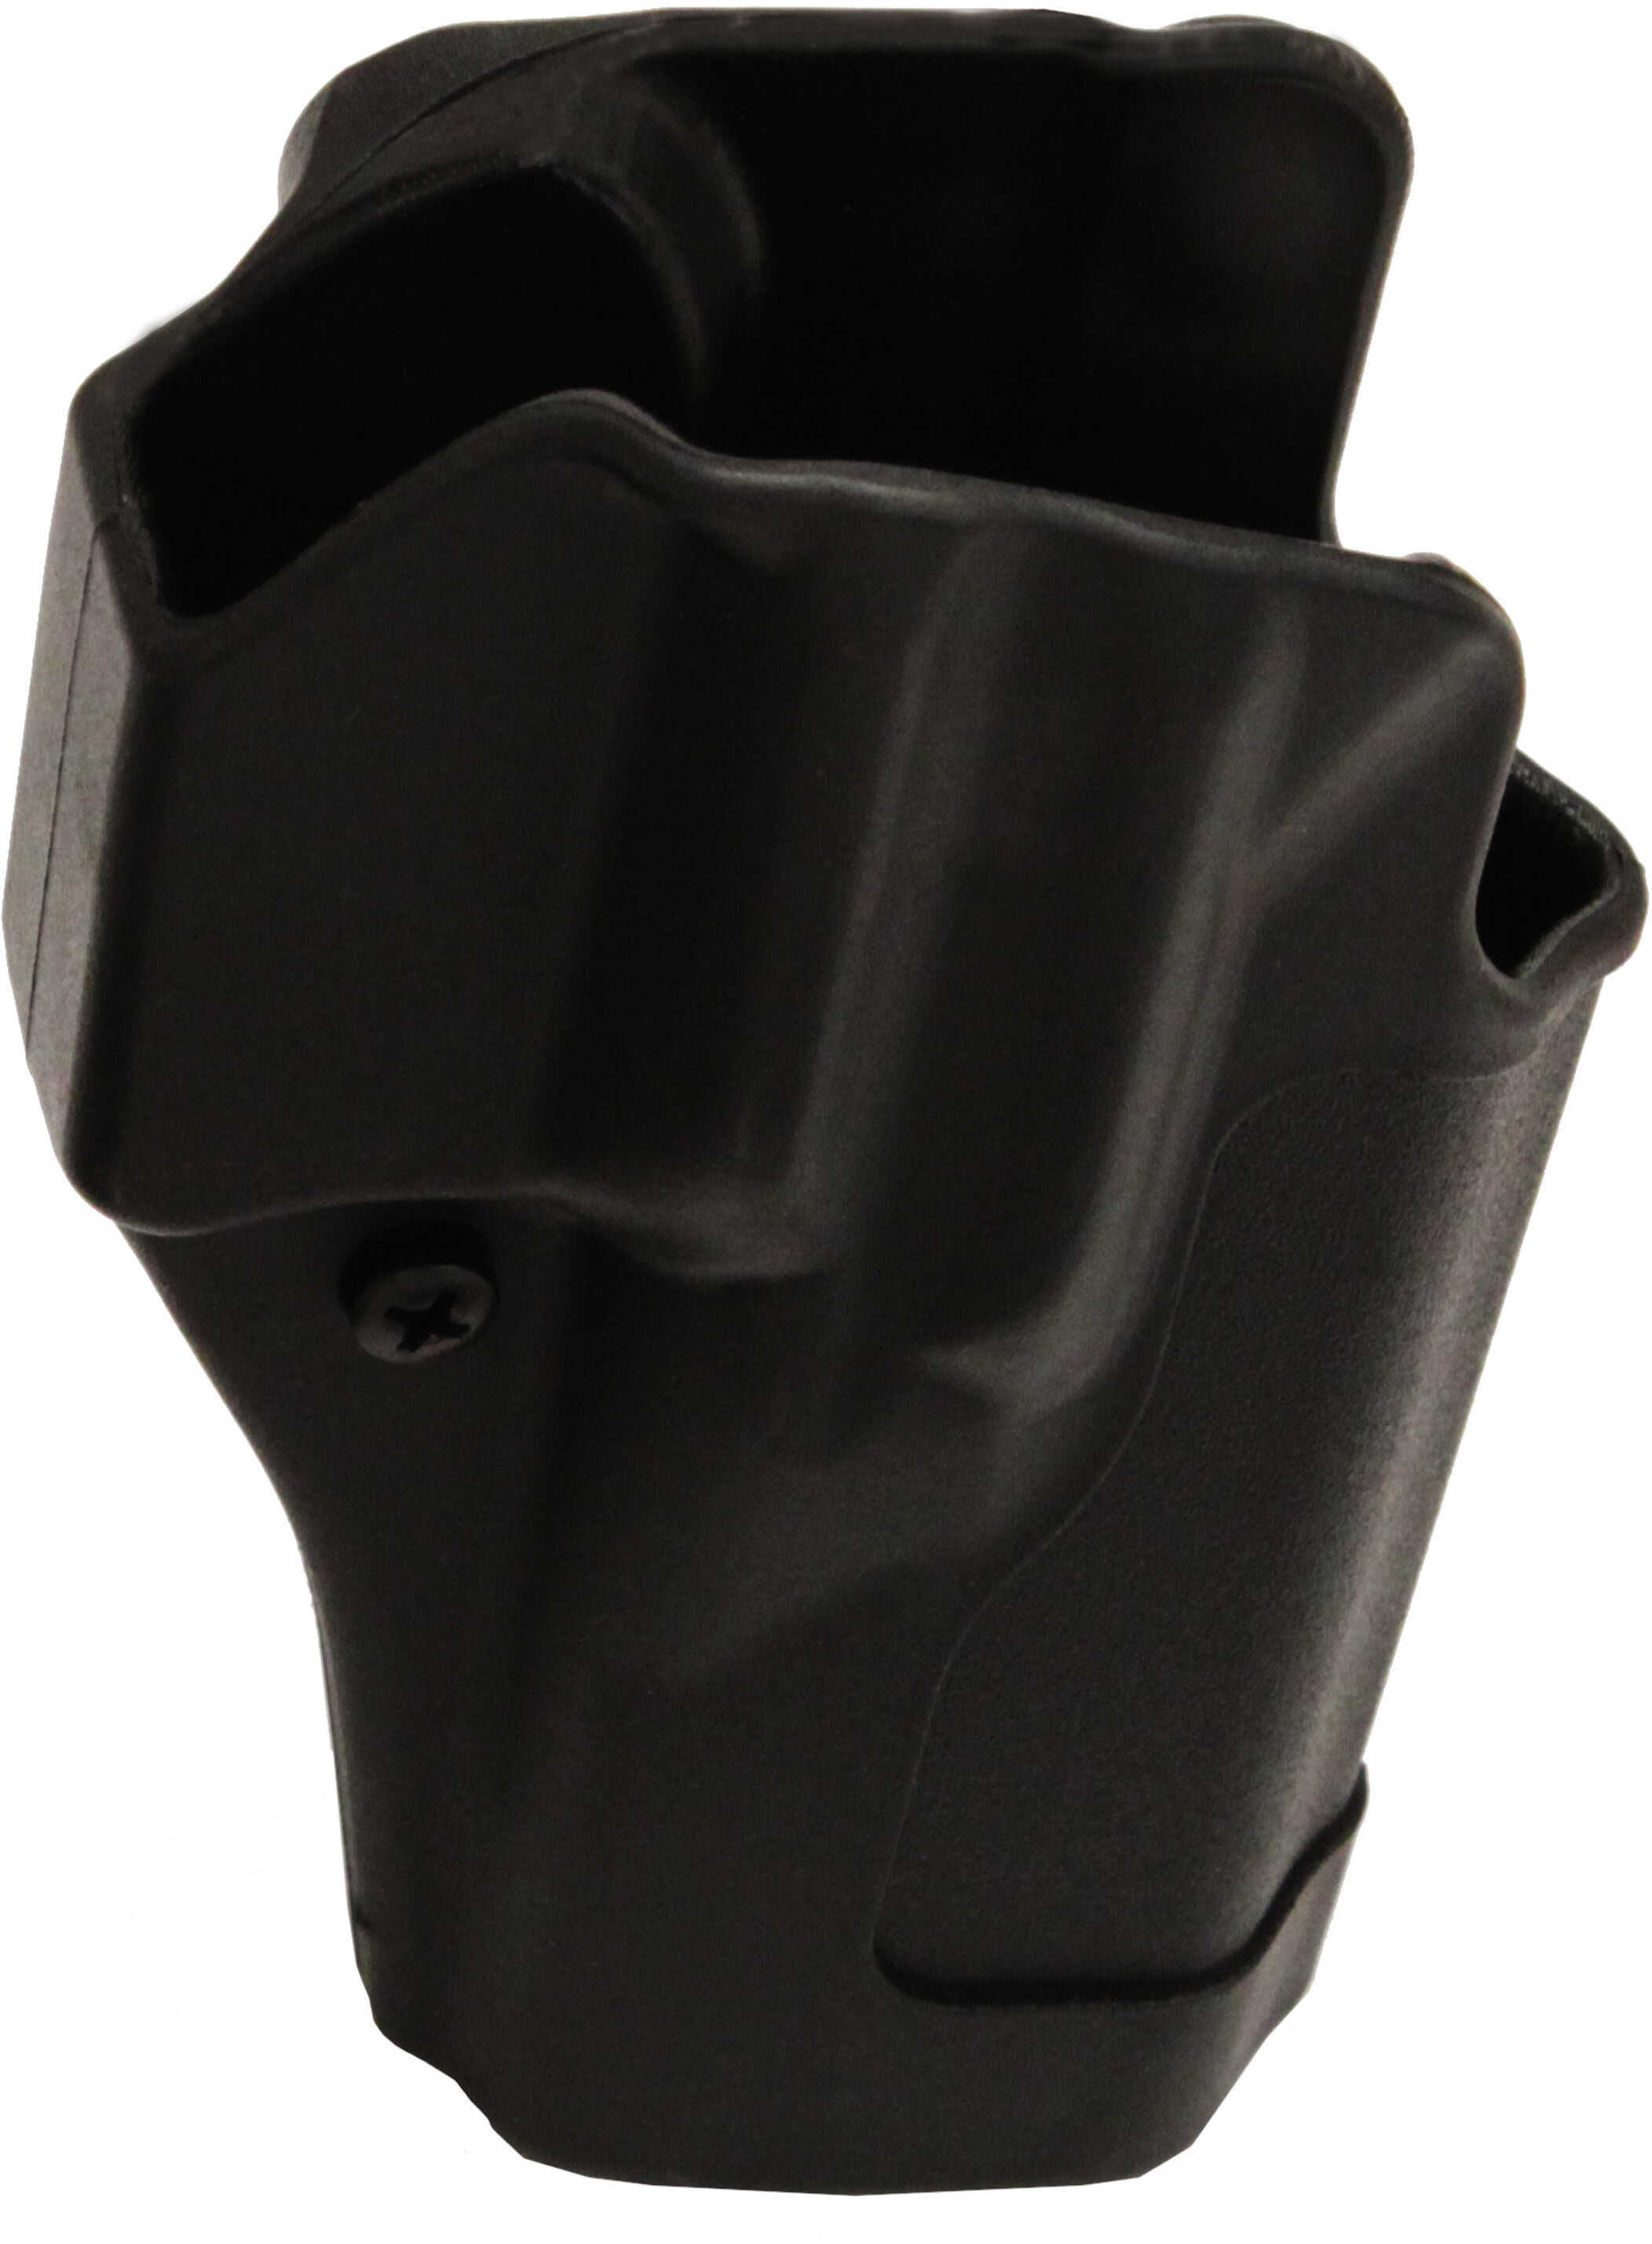 BlackHawk Products Group Sportster Standard Belt & Paddle Right Hand, for Glock 17/22/31 415600BK-R